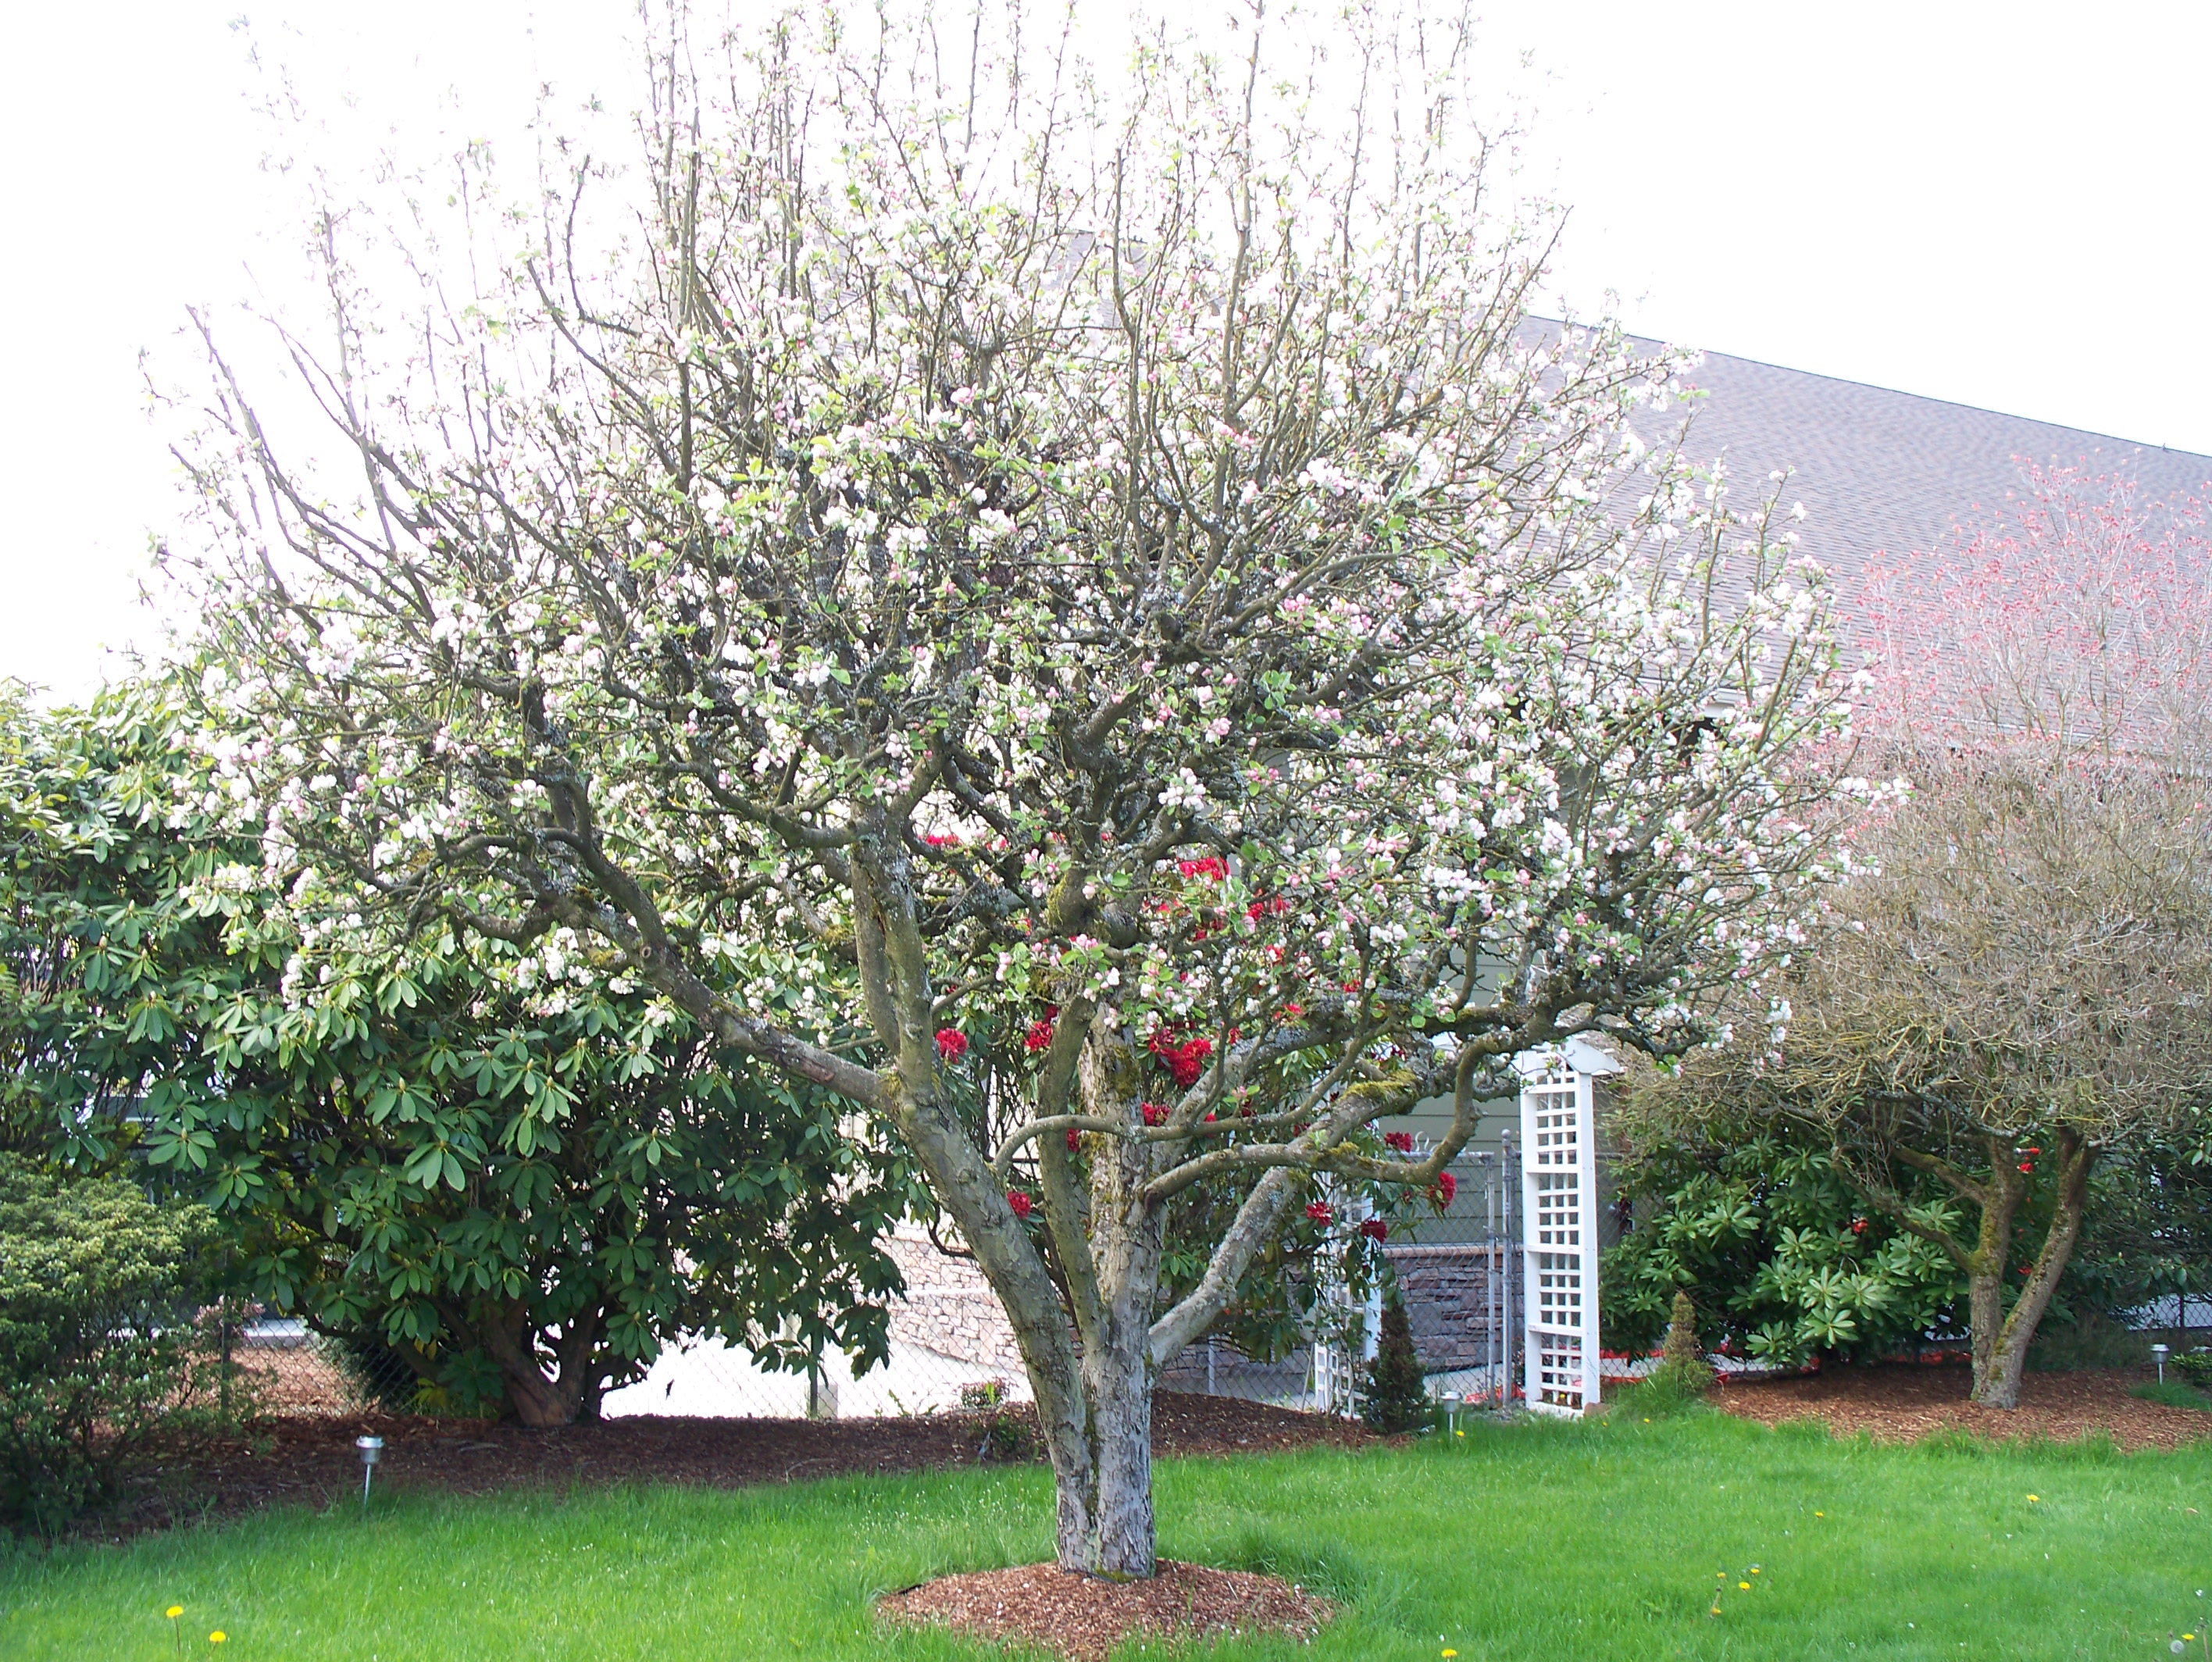 File:Apple Tree in Full Bloom.JPG - Wikimedia Commons